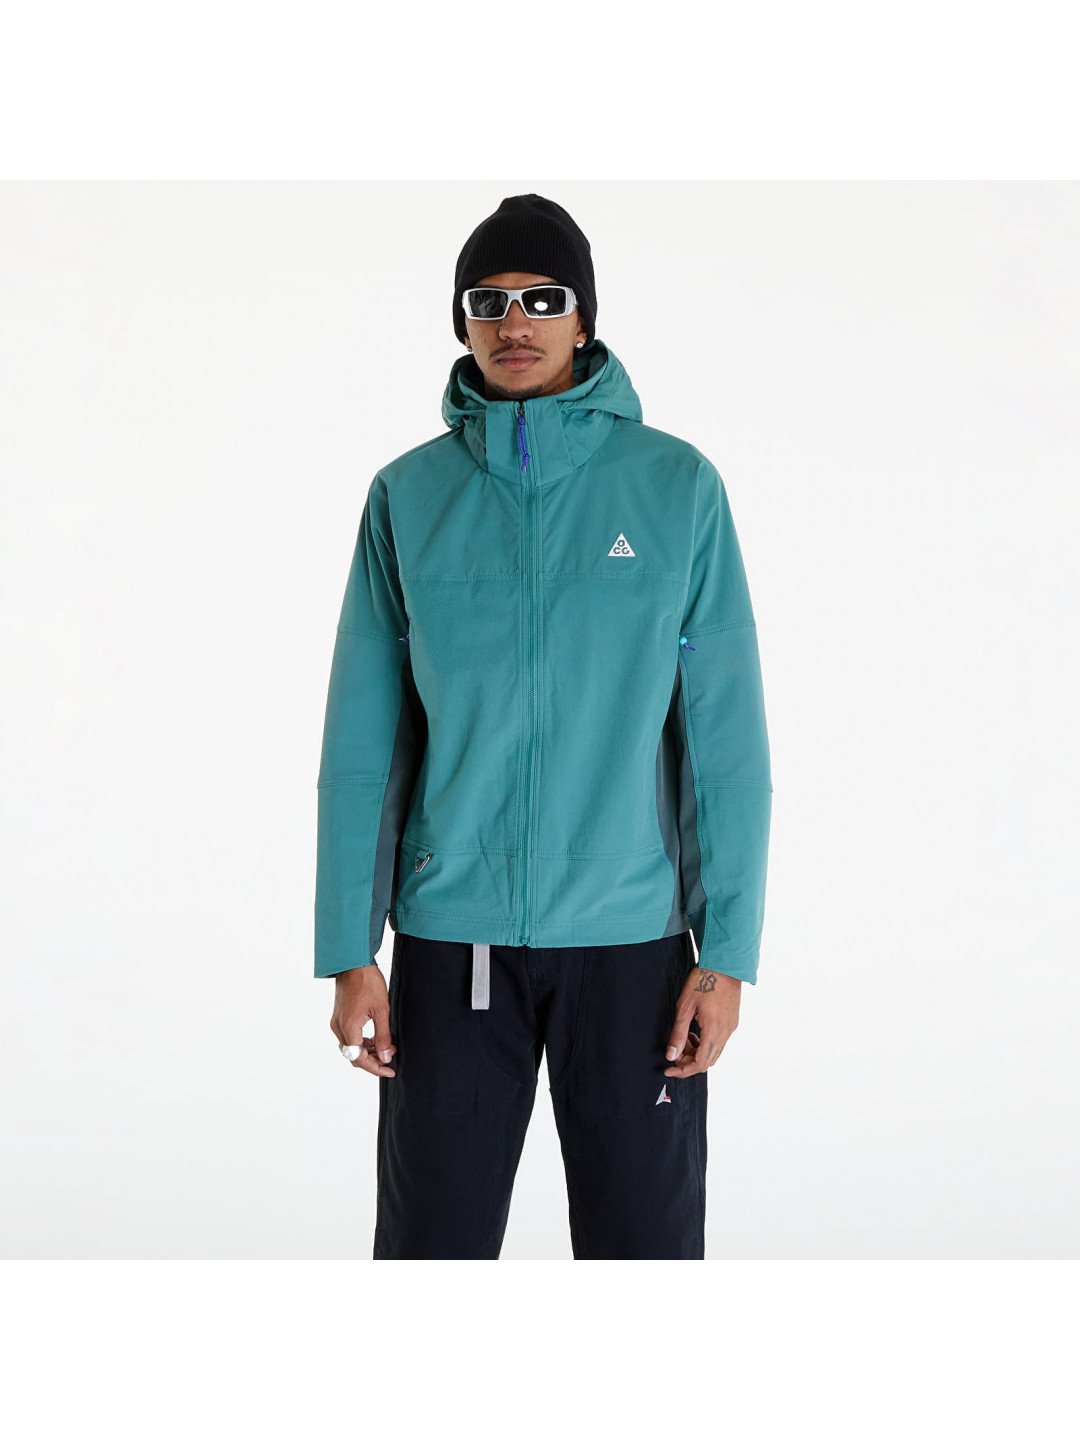 Nike ACG quot Sun Farer quot Men s Jacket Bicoastal Vintage Green Summit White